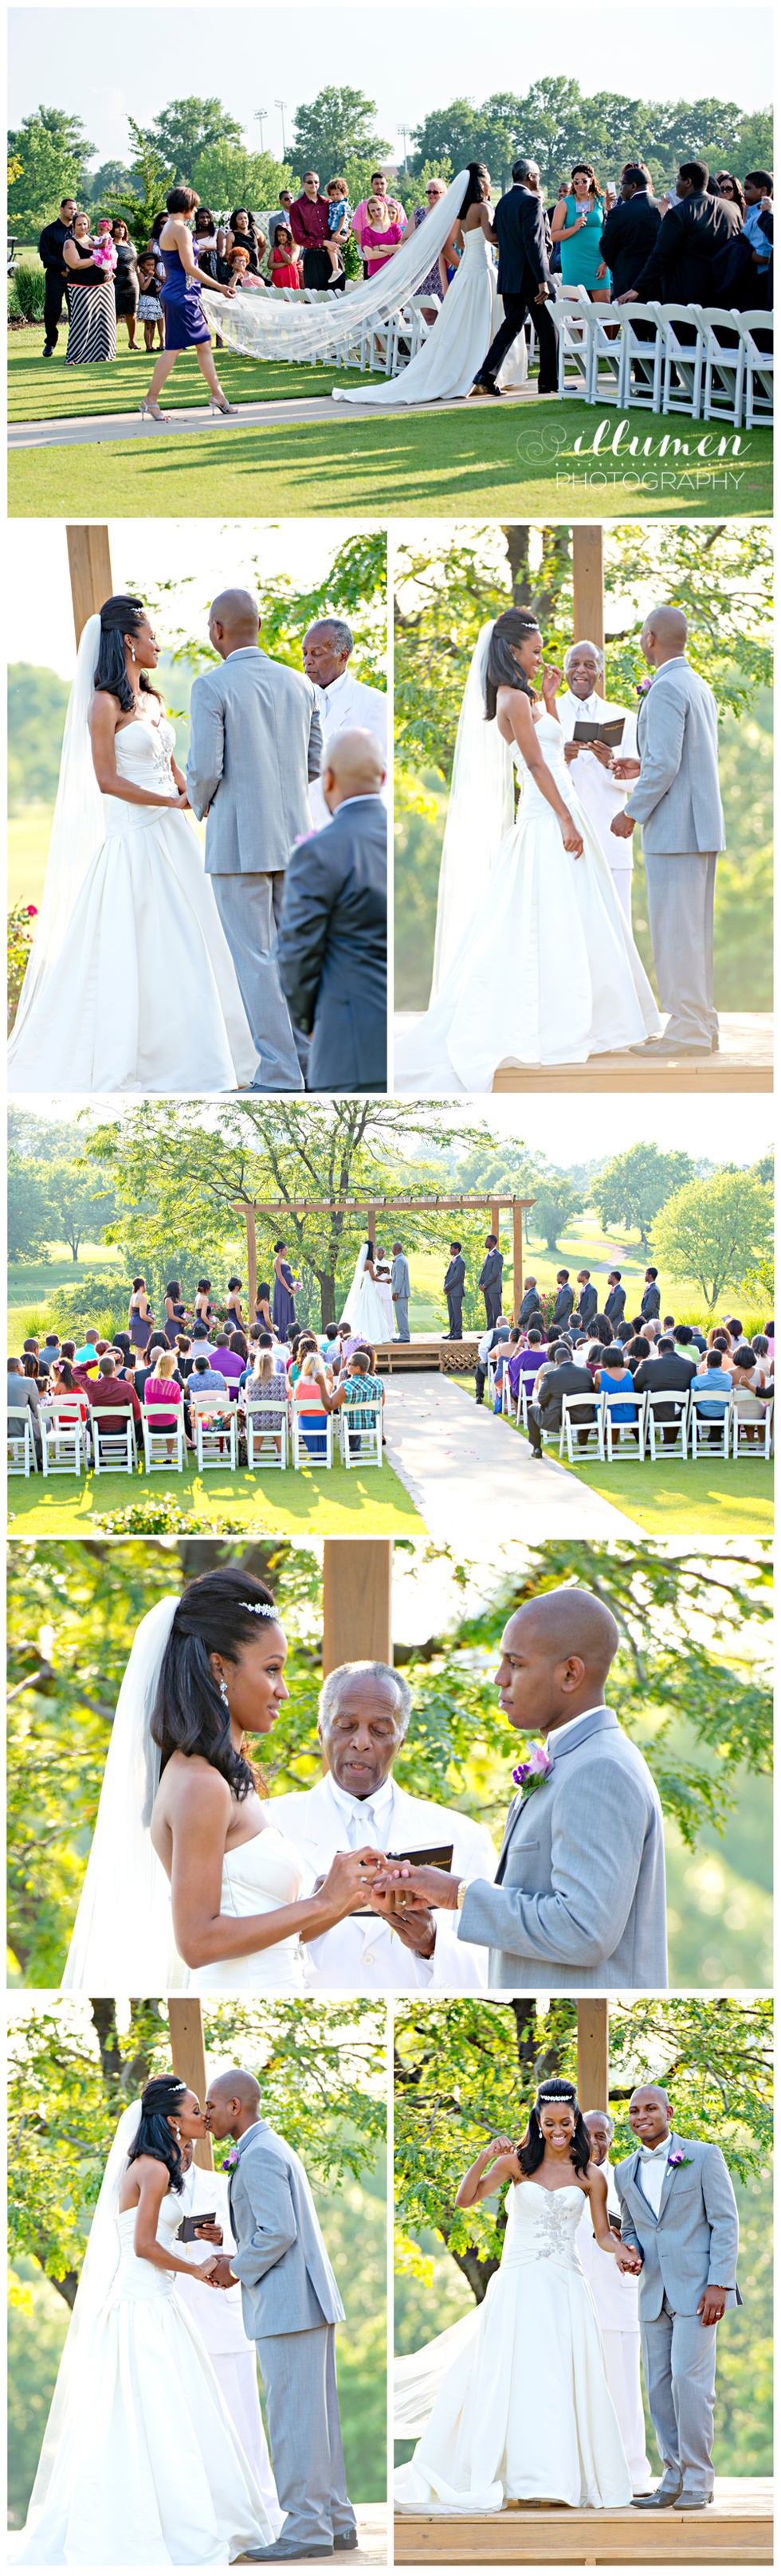 St. Louis Wedding Photography, www.illumenphotography.com, Illumen Photography